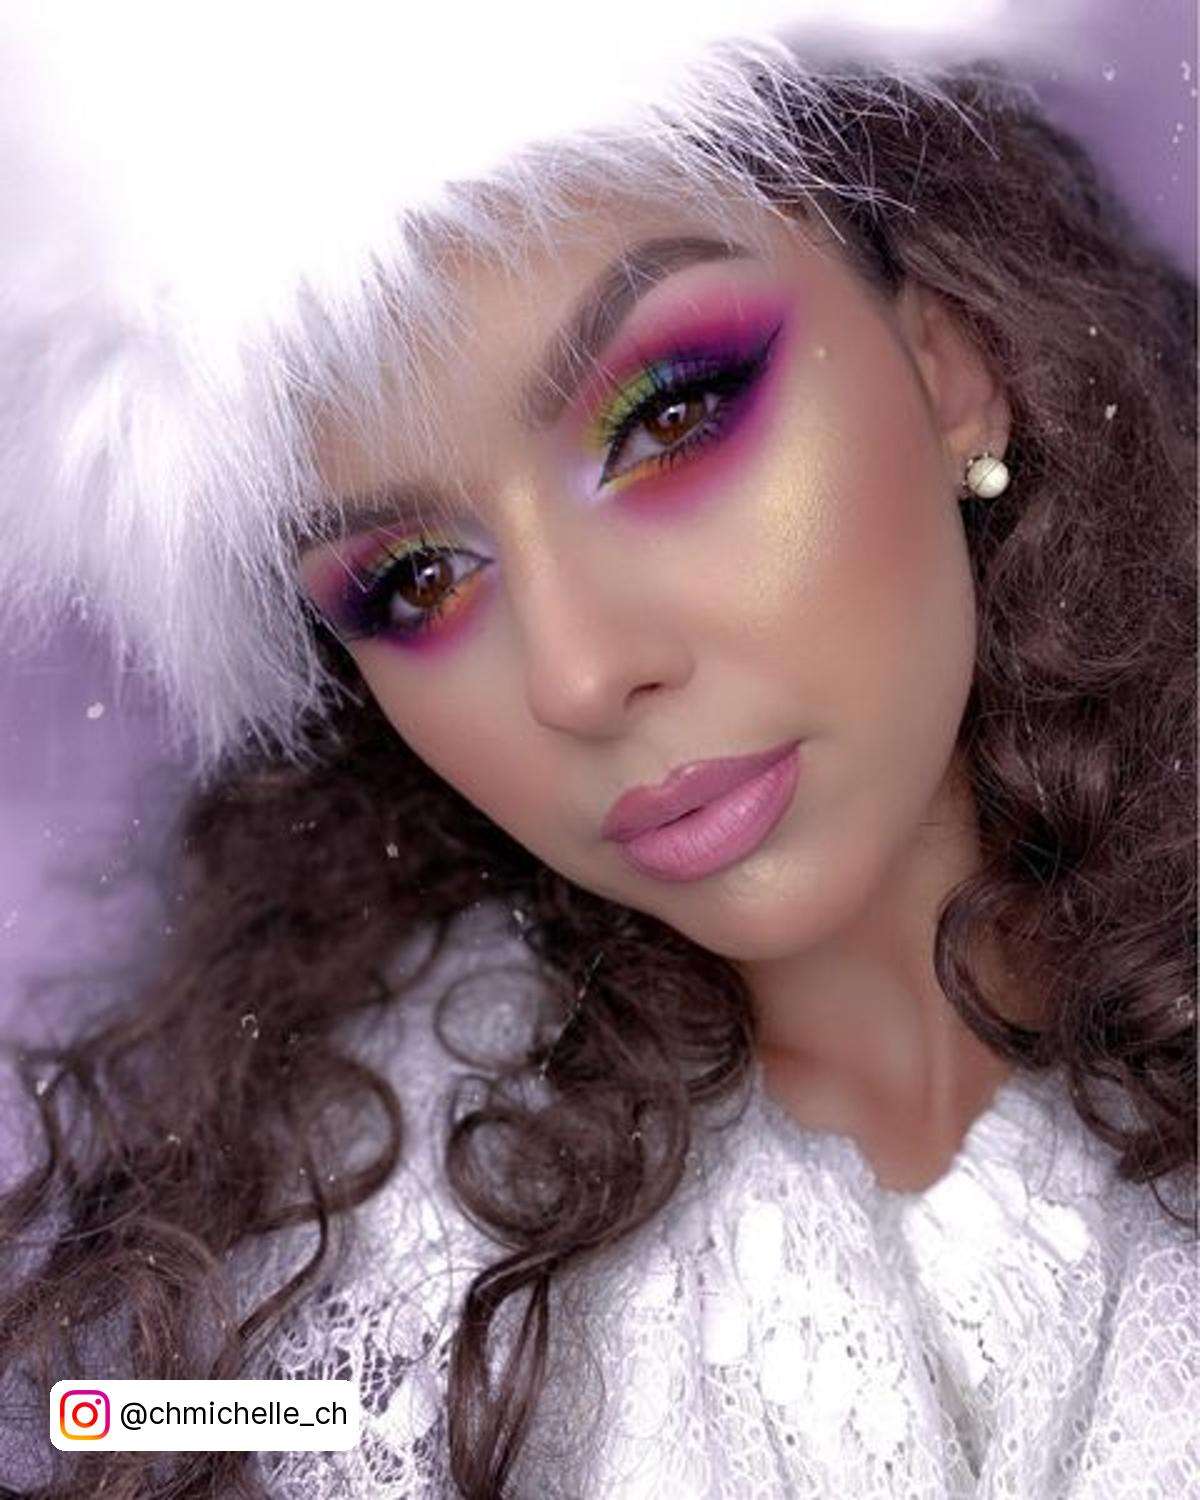 Winter Wonderland Makeup